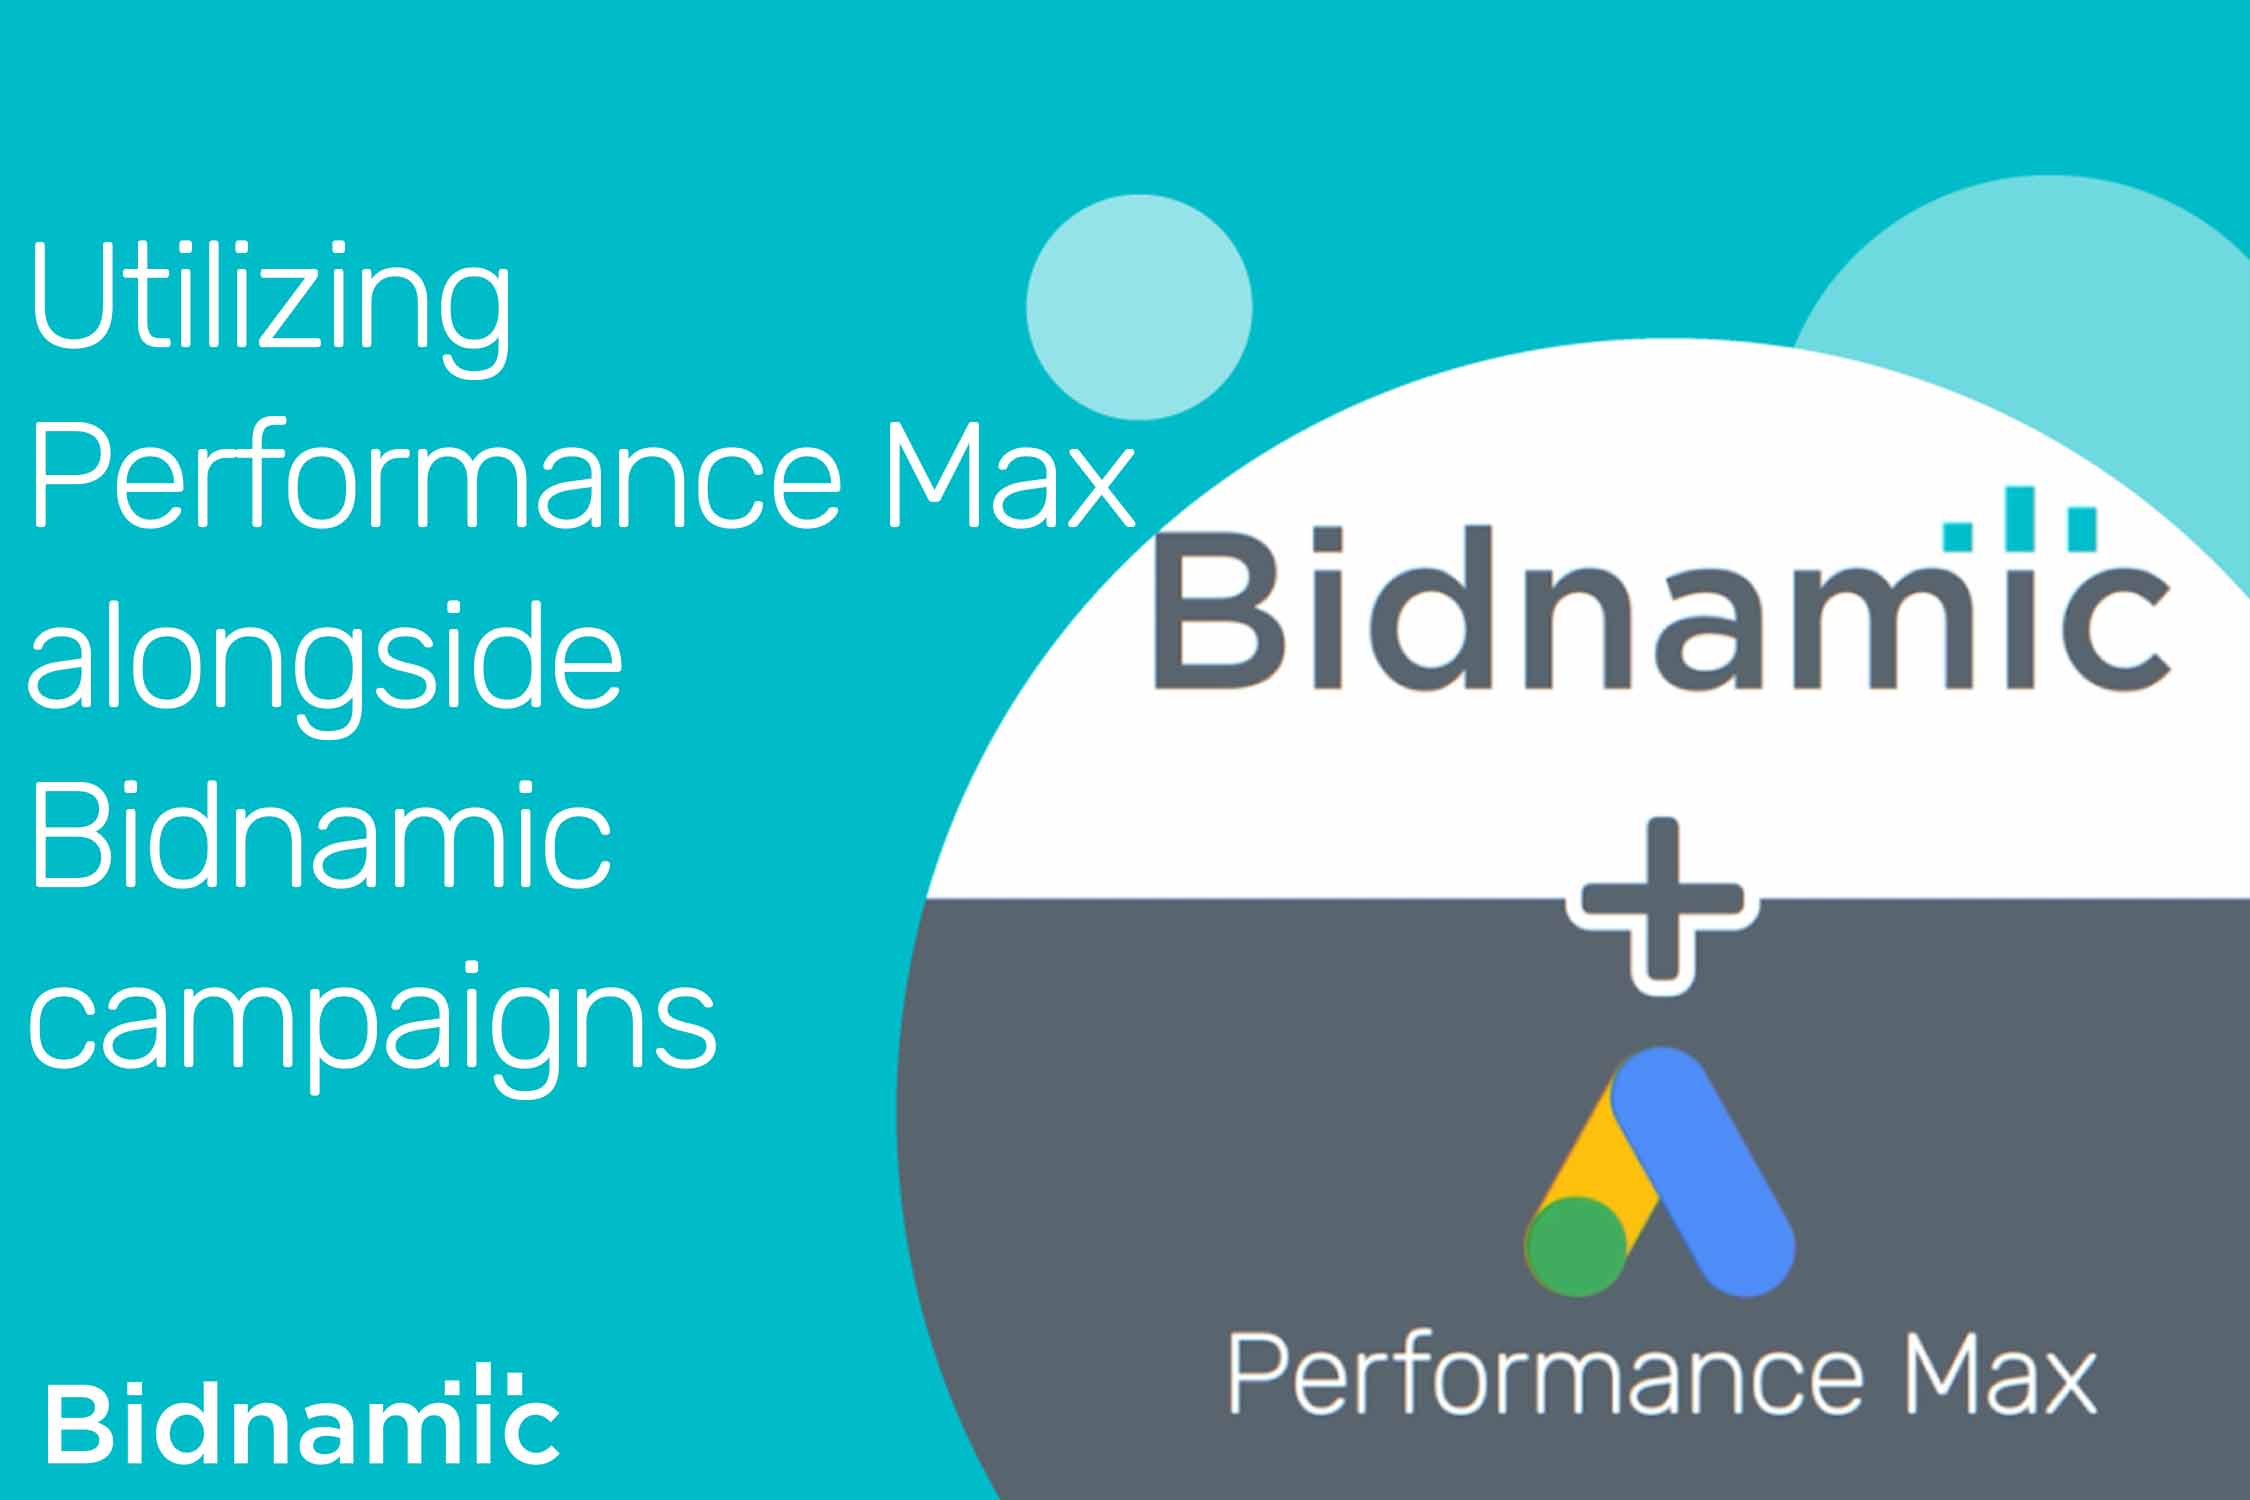 Utilizing Performance Max alongside Bidnamic campaigns